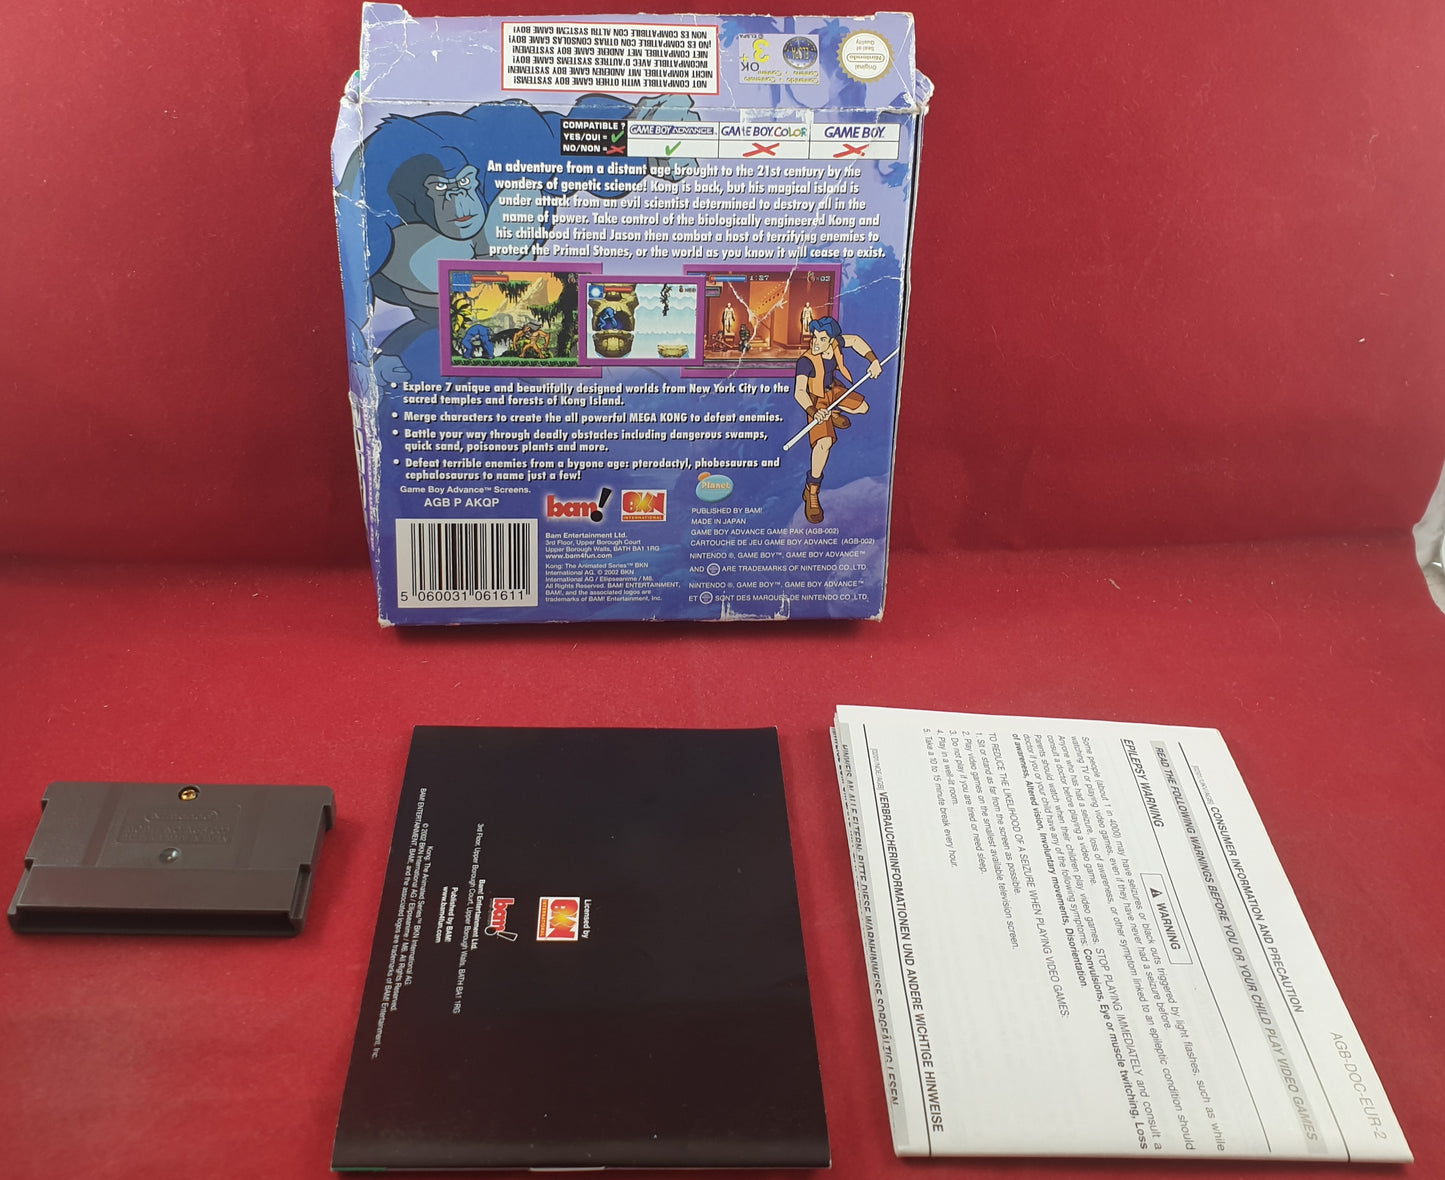 Kong the Animated Series Game Boy Advance Game